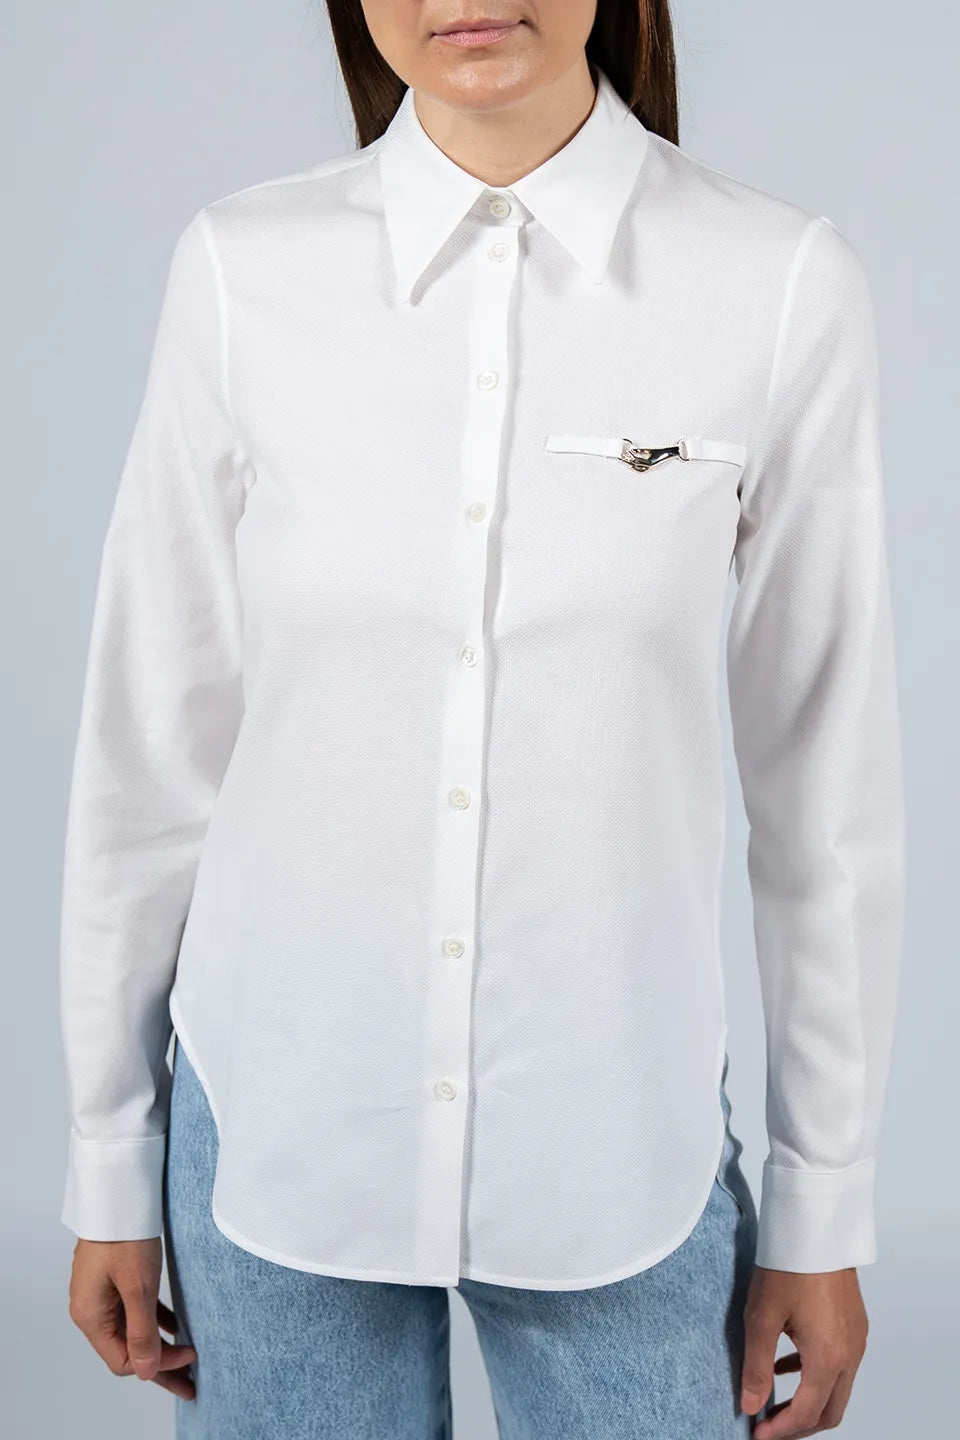 Shop online trendy White Shirt from Vivetta Fashion designer. Product gallery 1